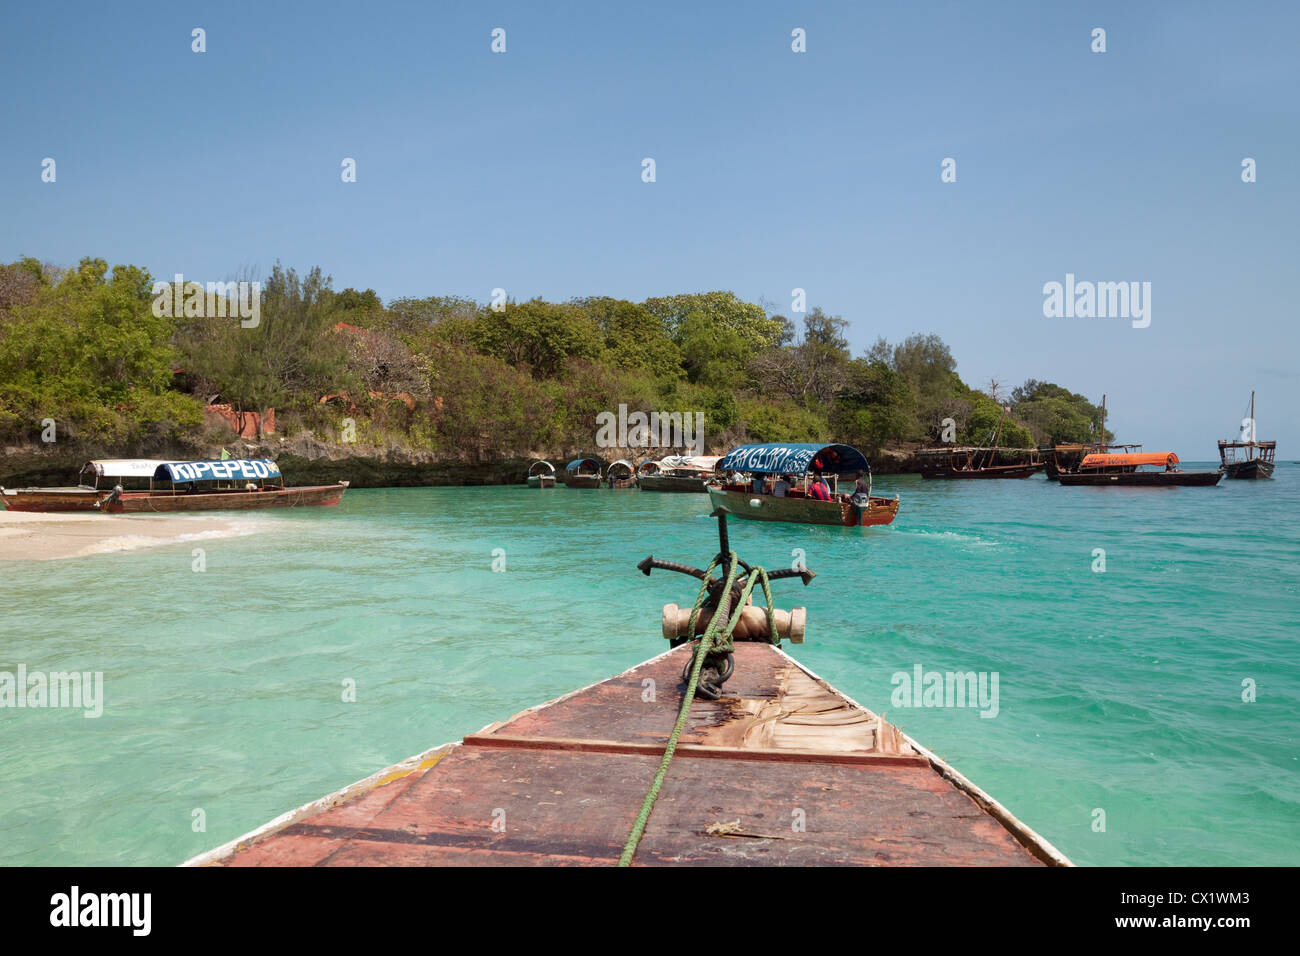 Boats with tourists arriving at Prison Island (Changuu); Zanzibar Africa Stock Photo